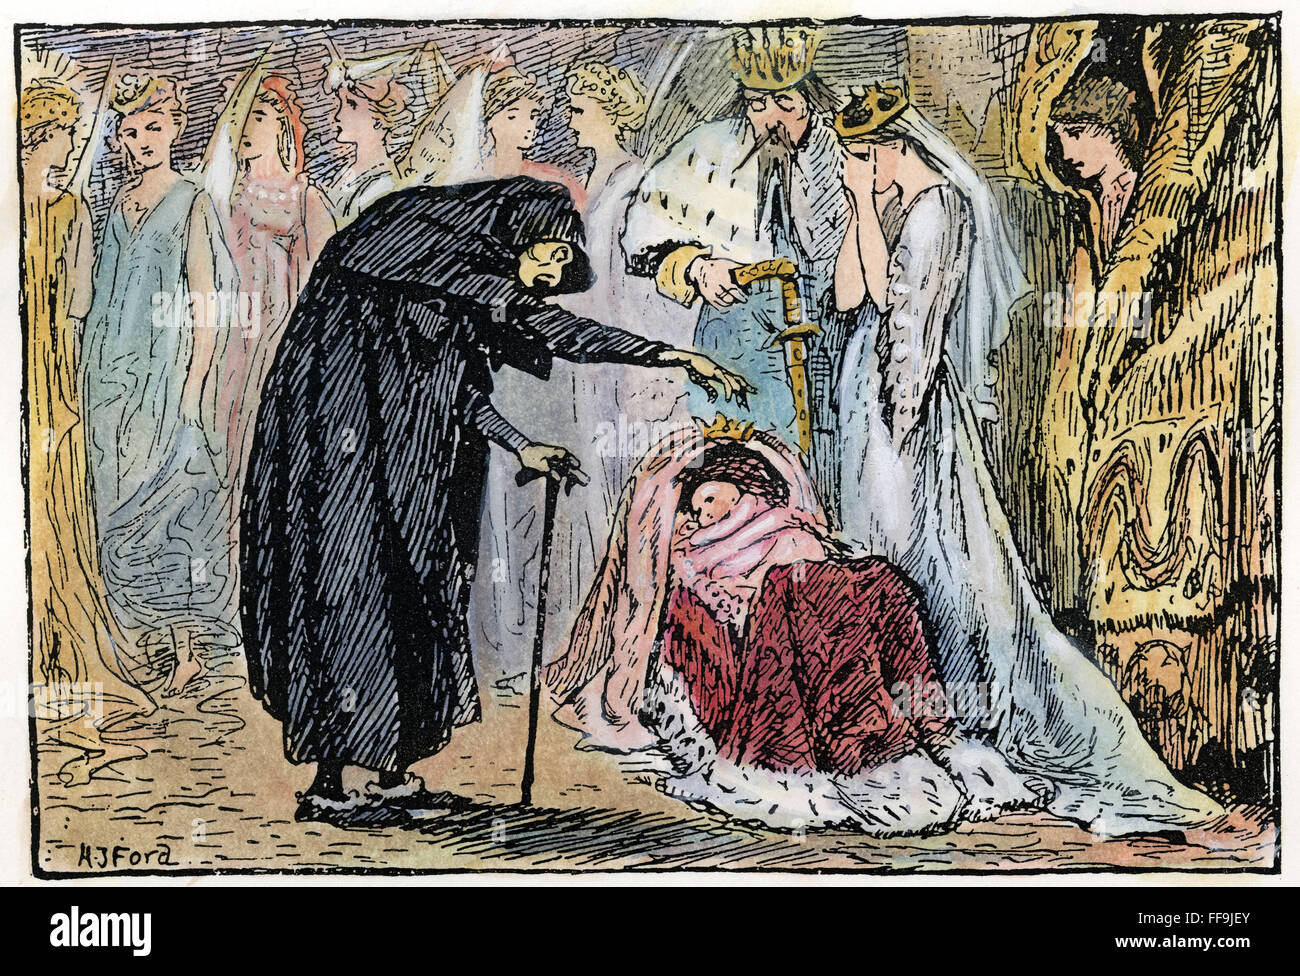 PERRAULT: Sleeping Beauty. /Nil old crone lancia un incantesimo sul baby princess. Disegno, c1891, da Henry J. Ford per la Perrault favola. Foto Stock